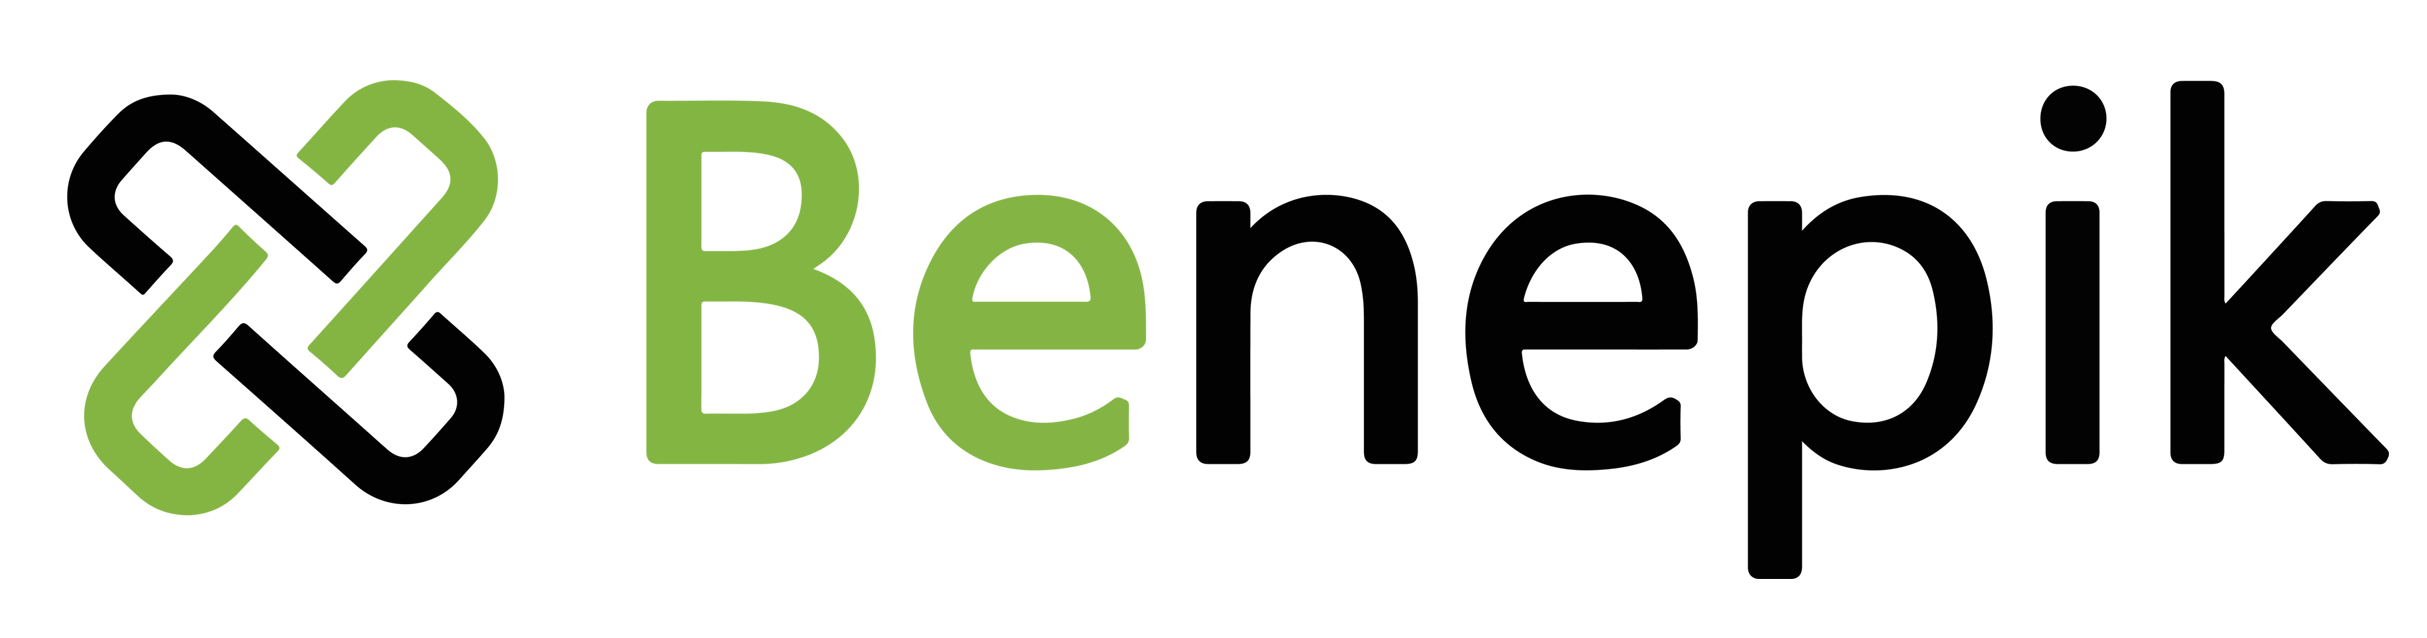 Benepik Technology Logo